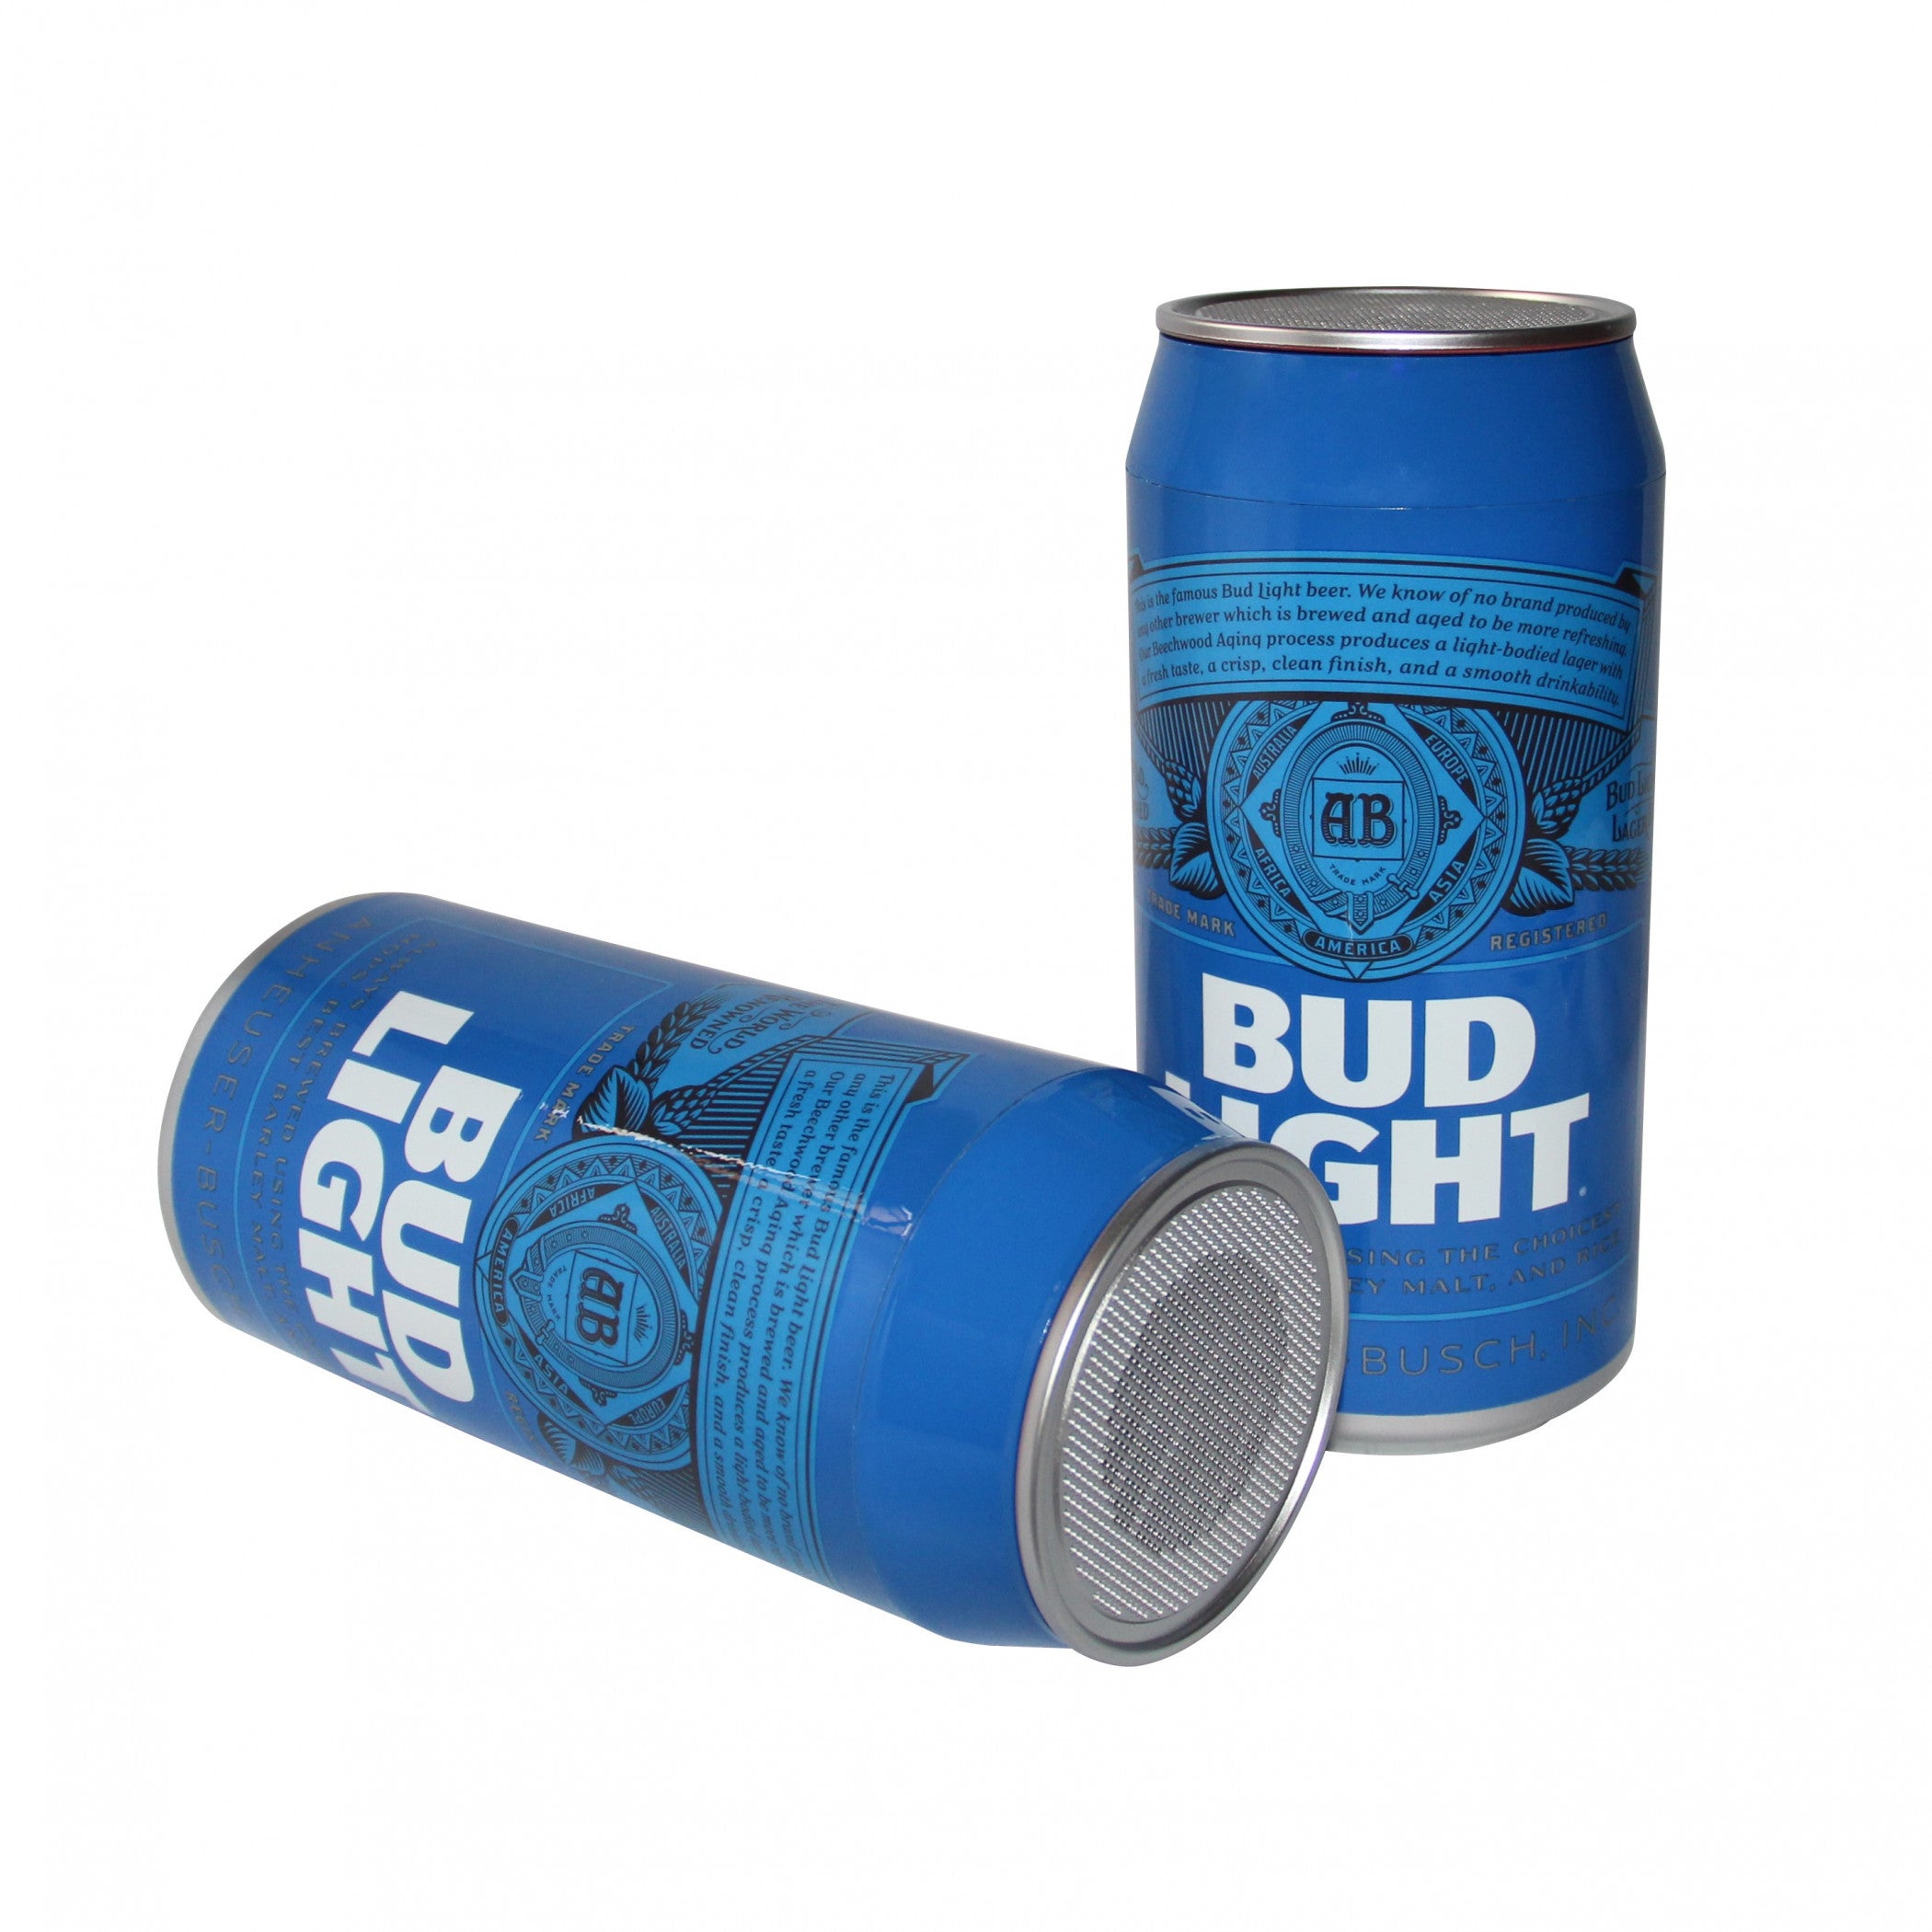 Bud Light Seltzer Bluetooth Can Speaker - Black Cherry